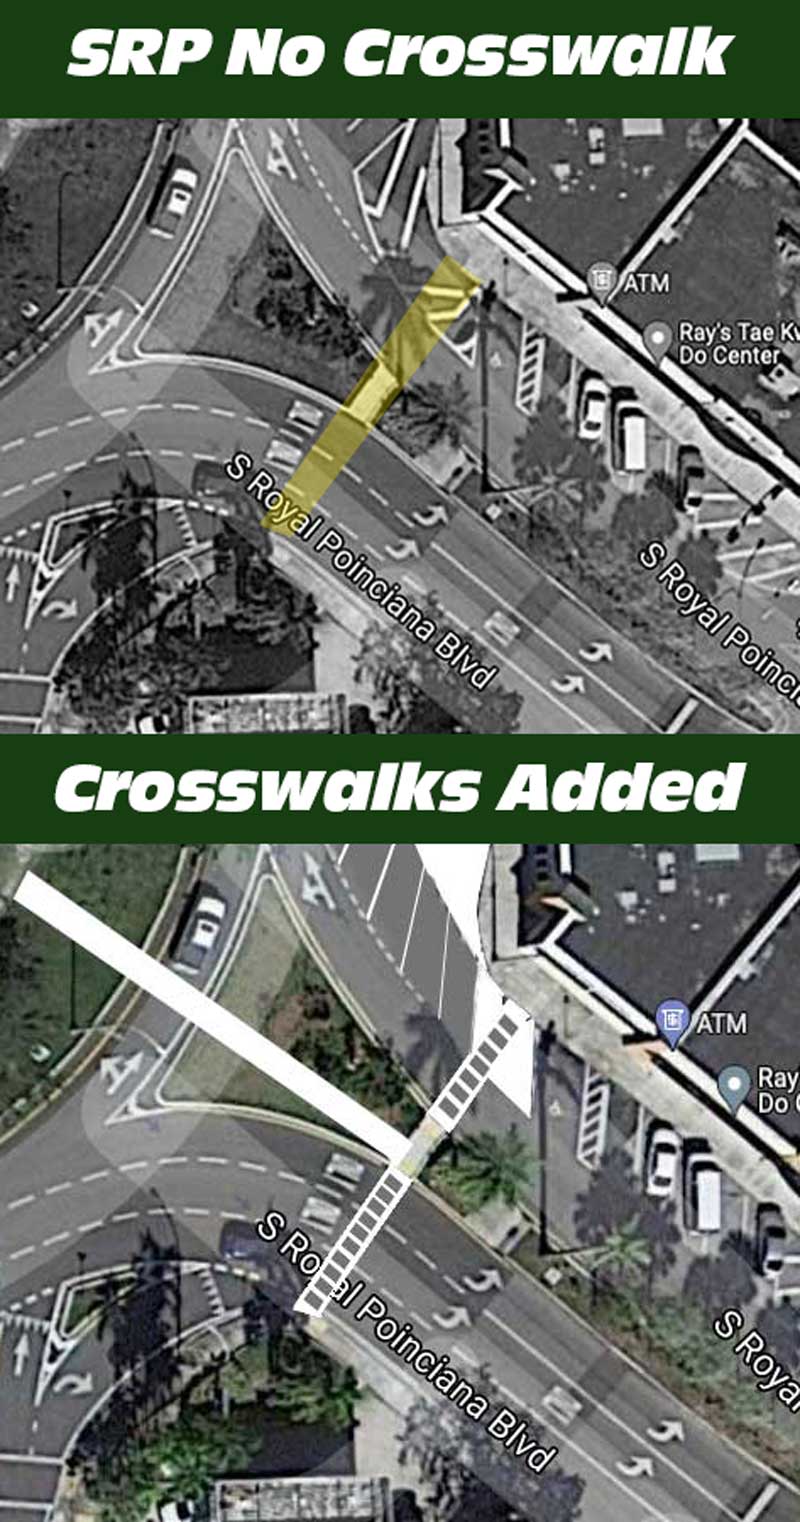 South Royal Poinciana Crosswalks